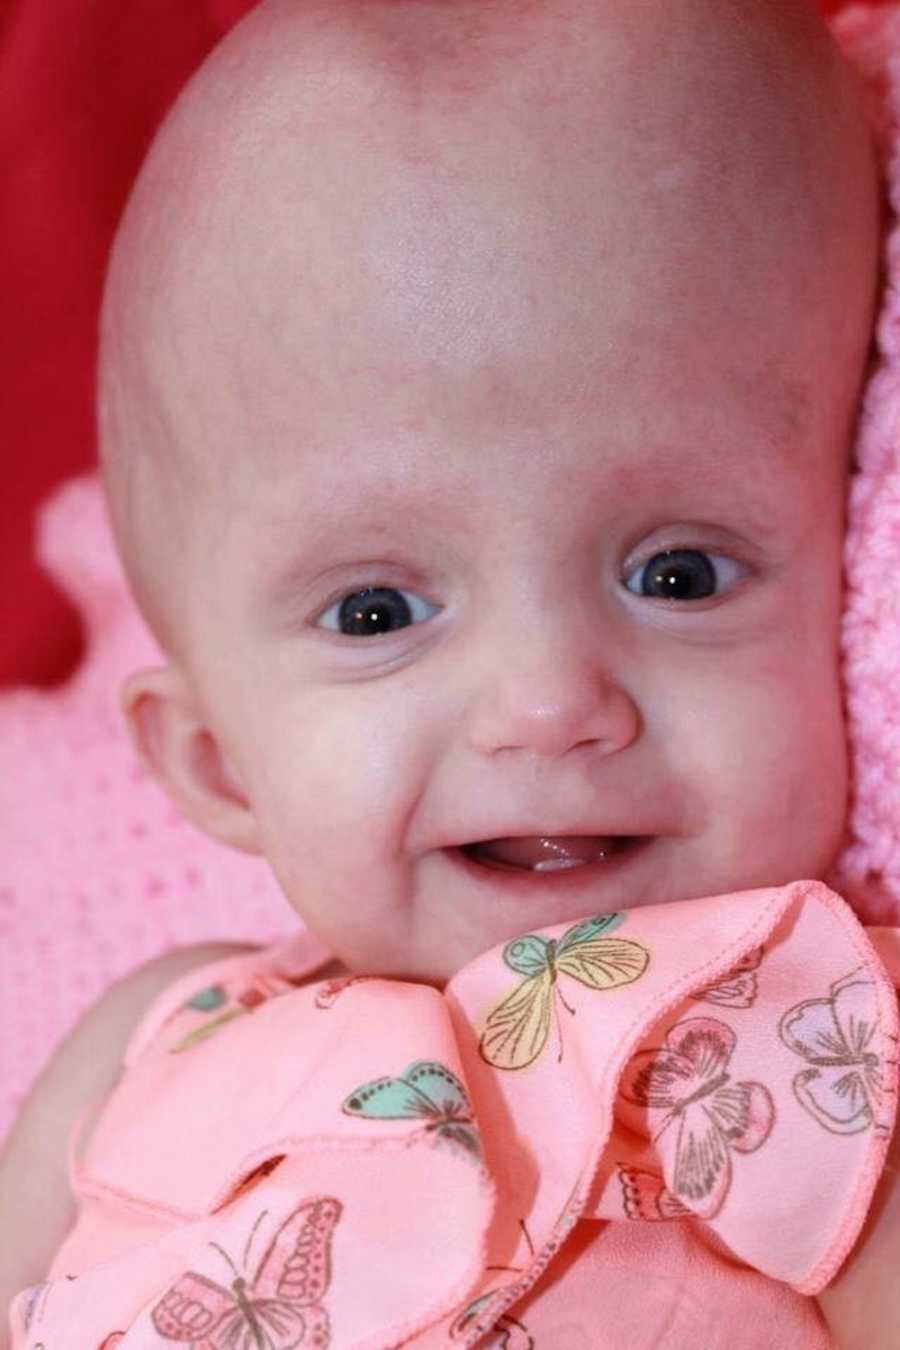 Baby who has terminal brain cancer smiles 